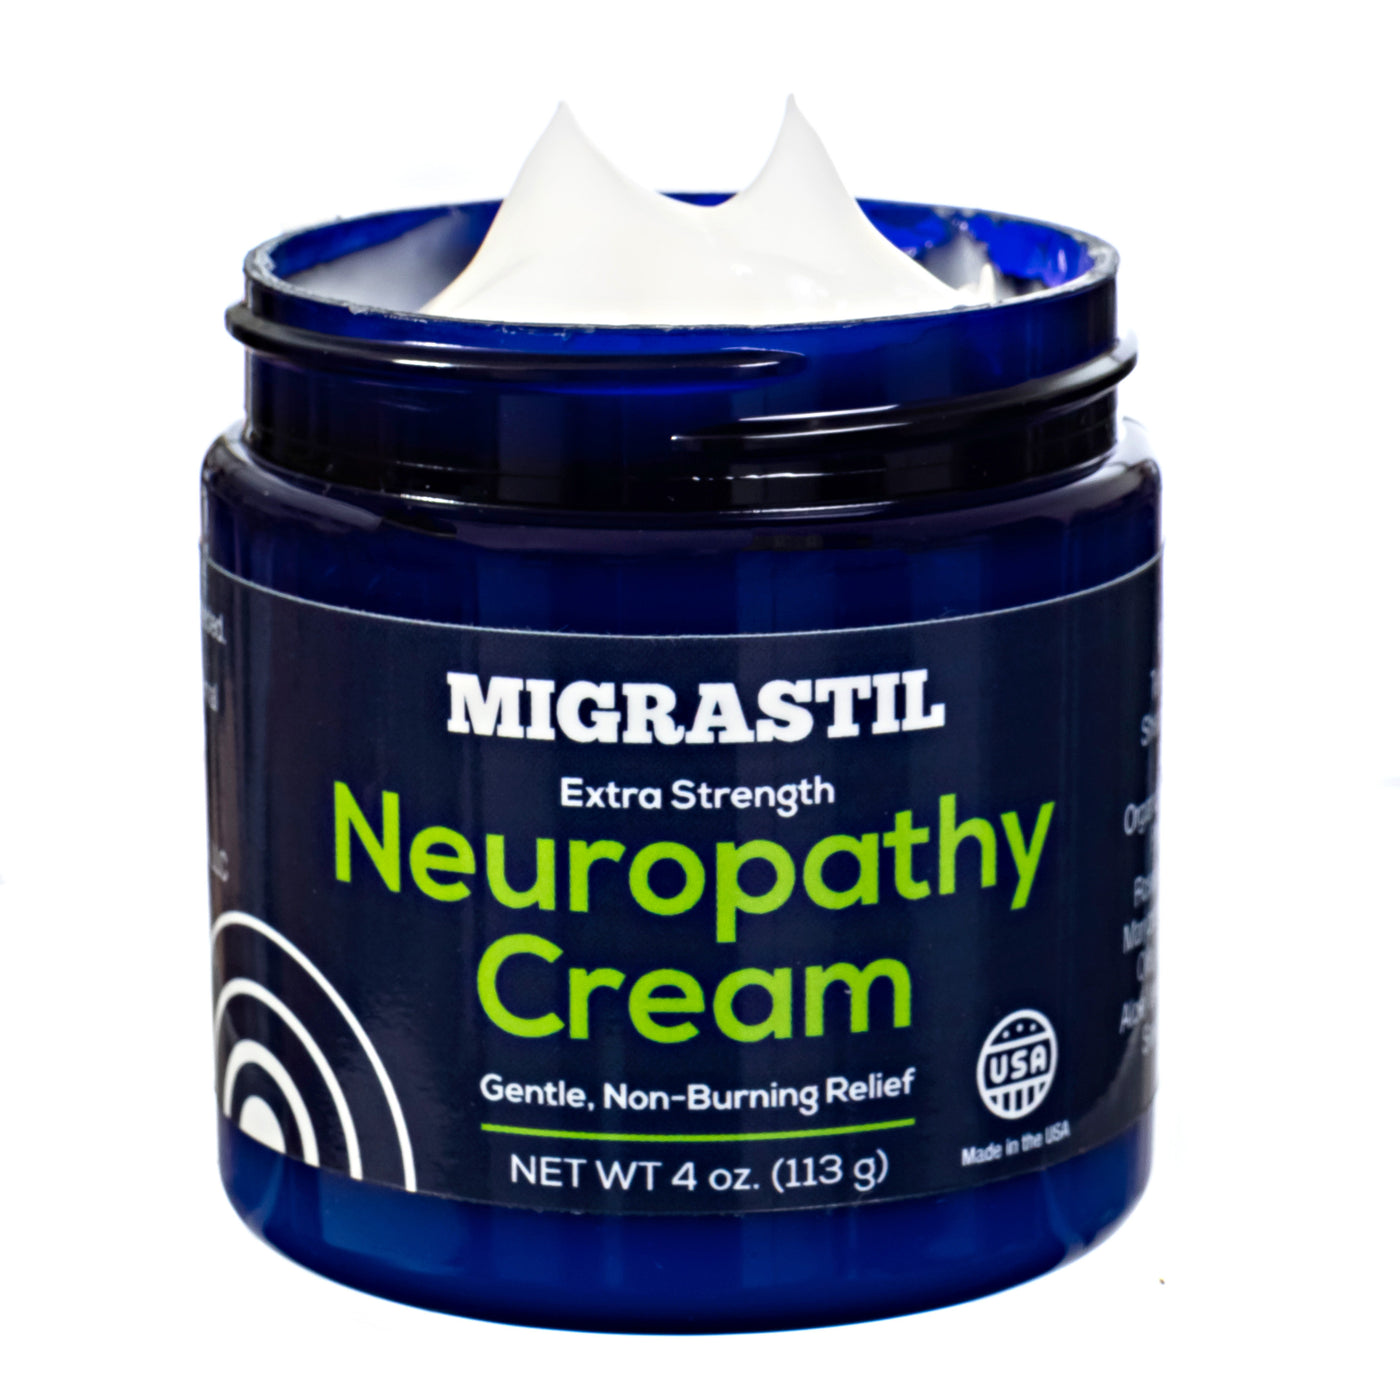 Migrastil Extra Strength Neuropathy Cream